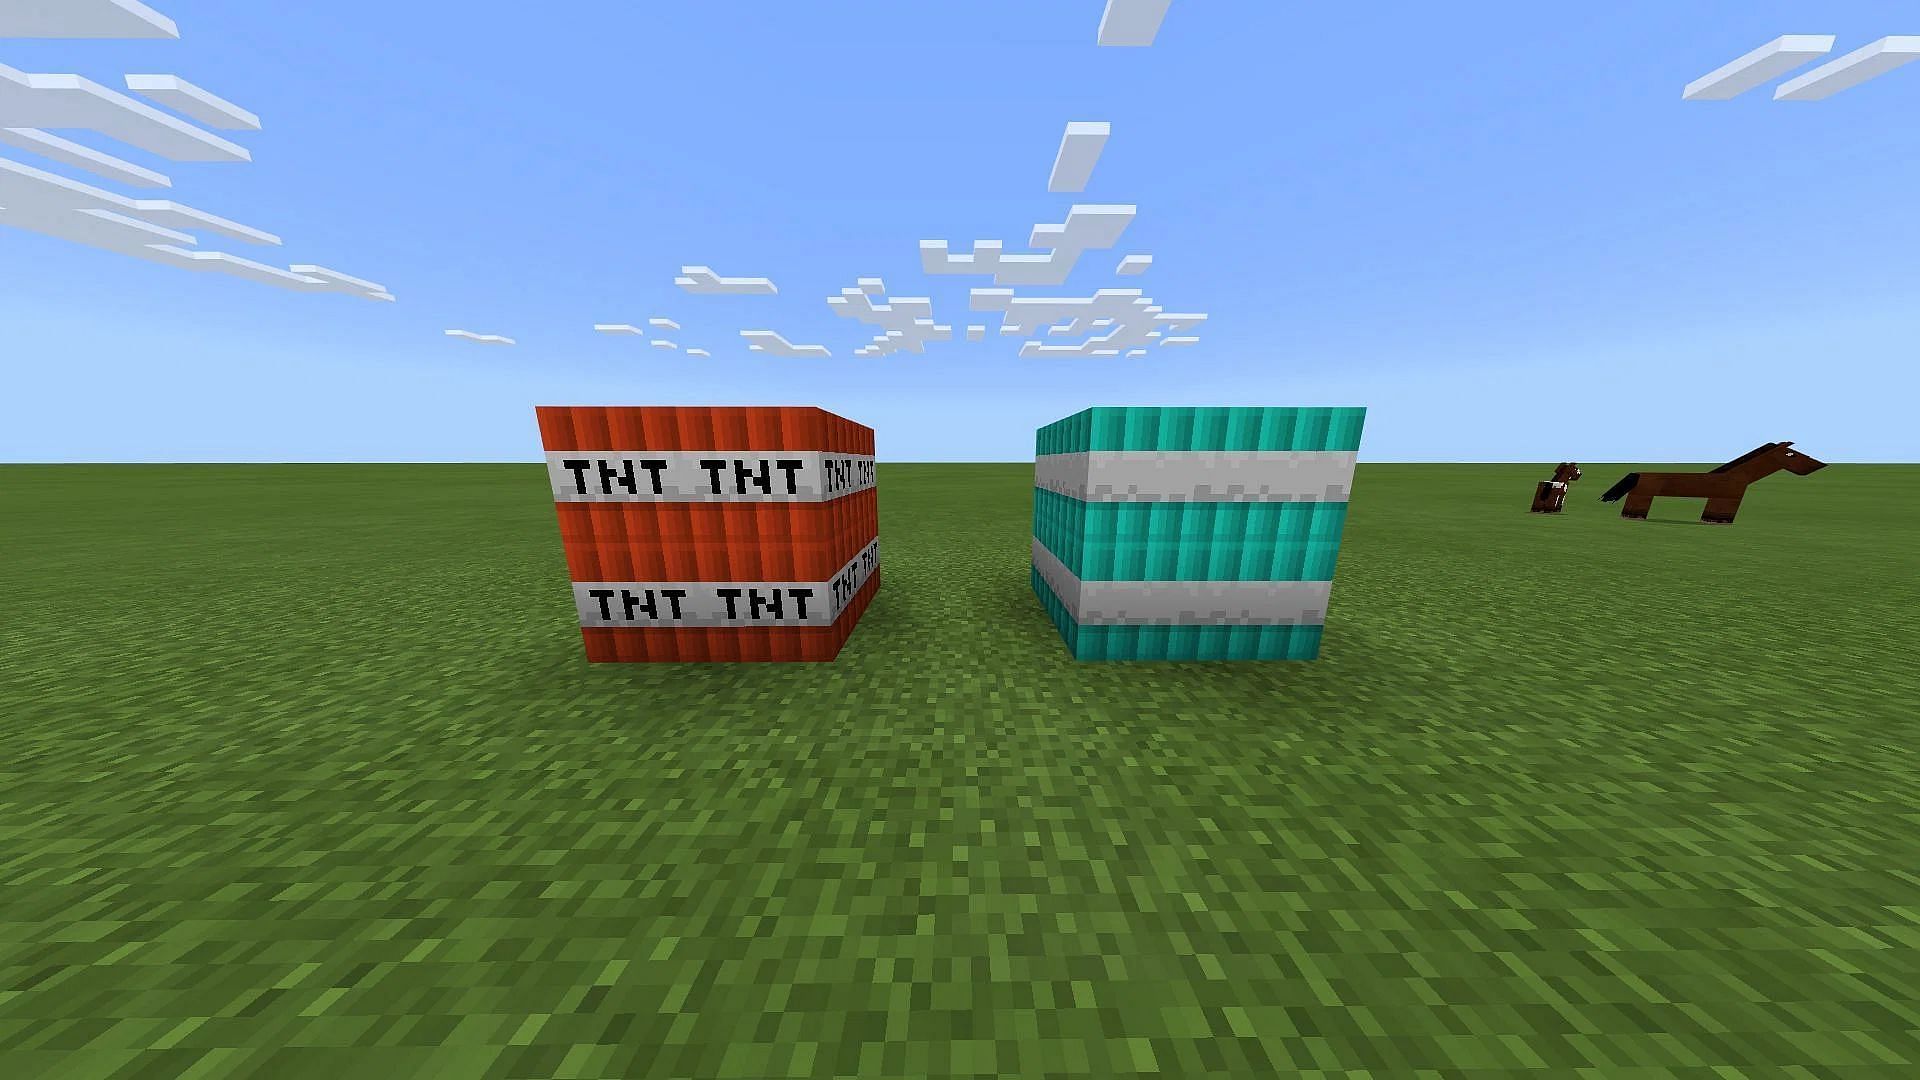 Underwater TNT comparison with regular TNT in Minecraft (Image via Mojang)